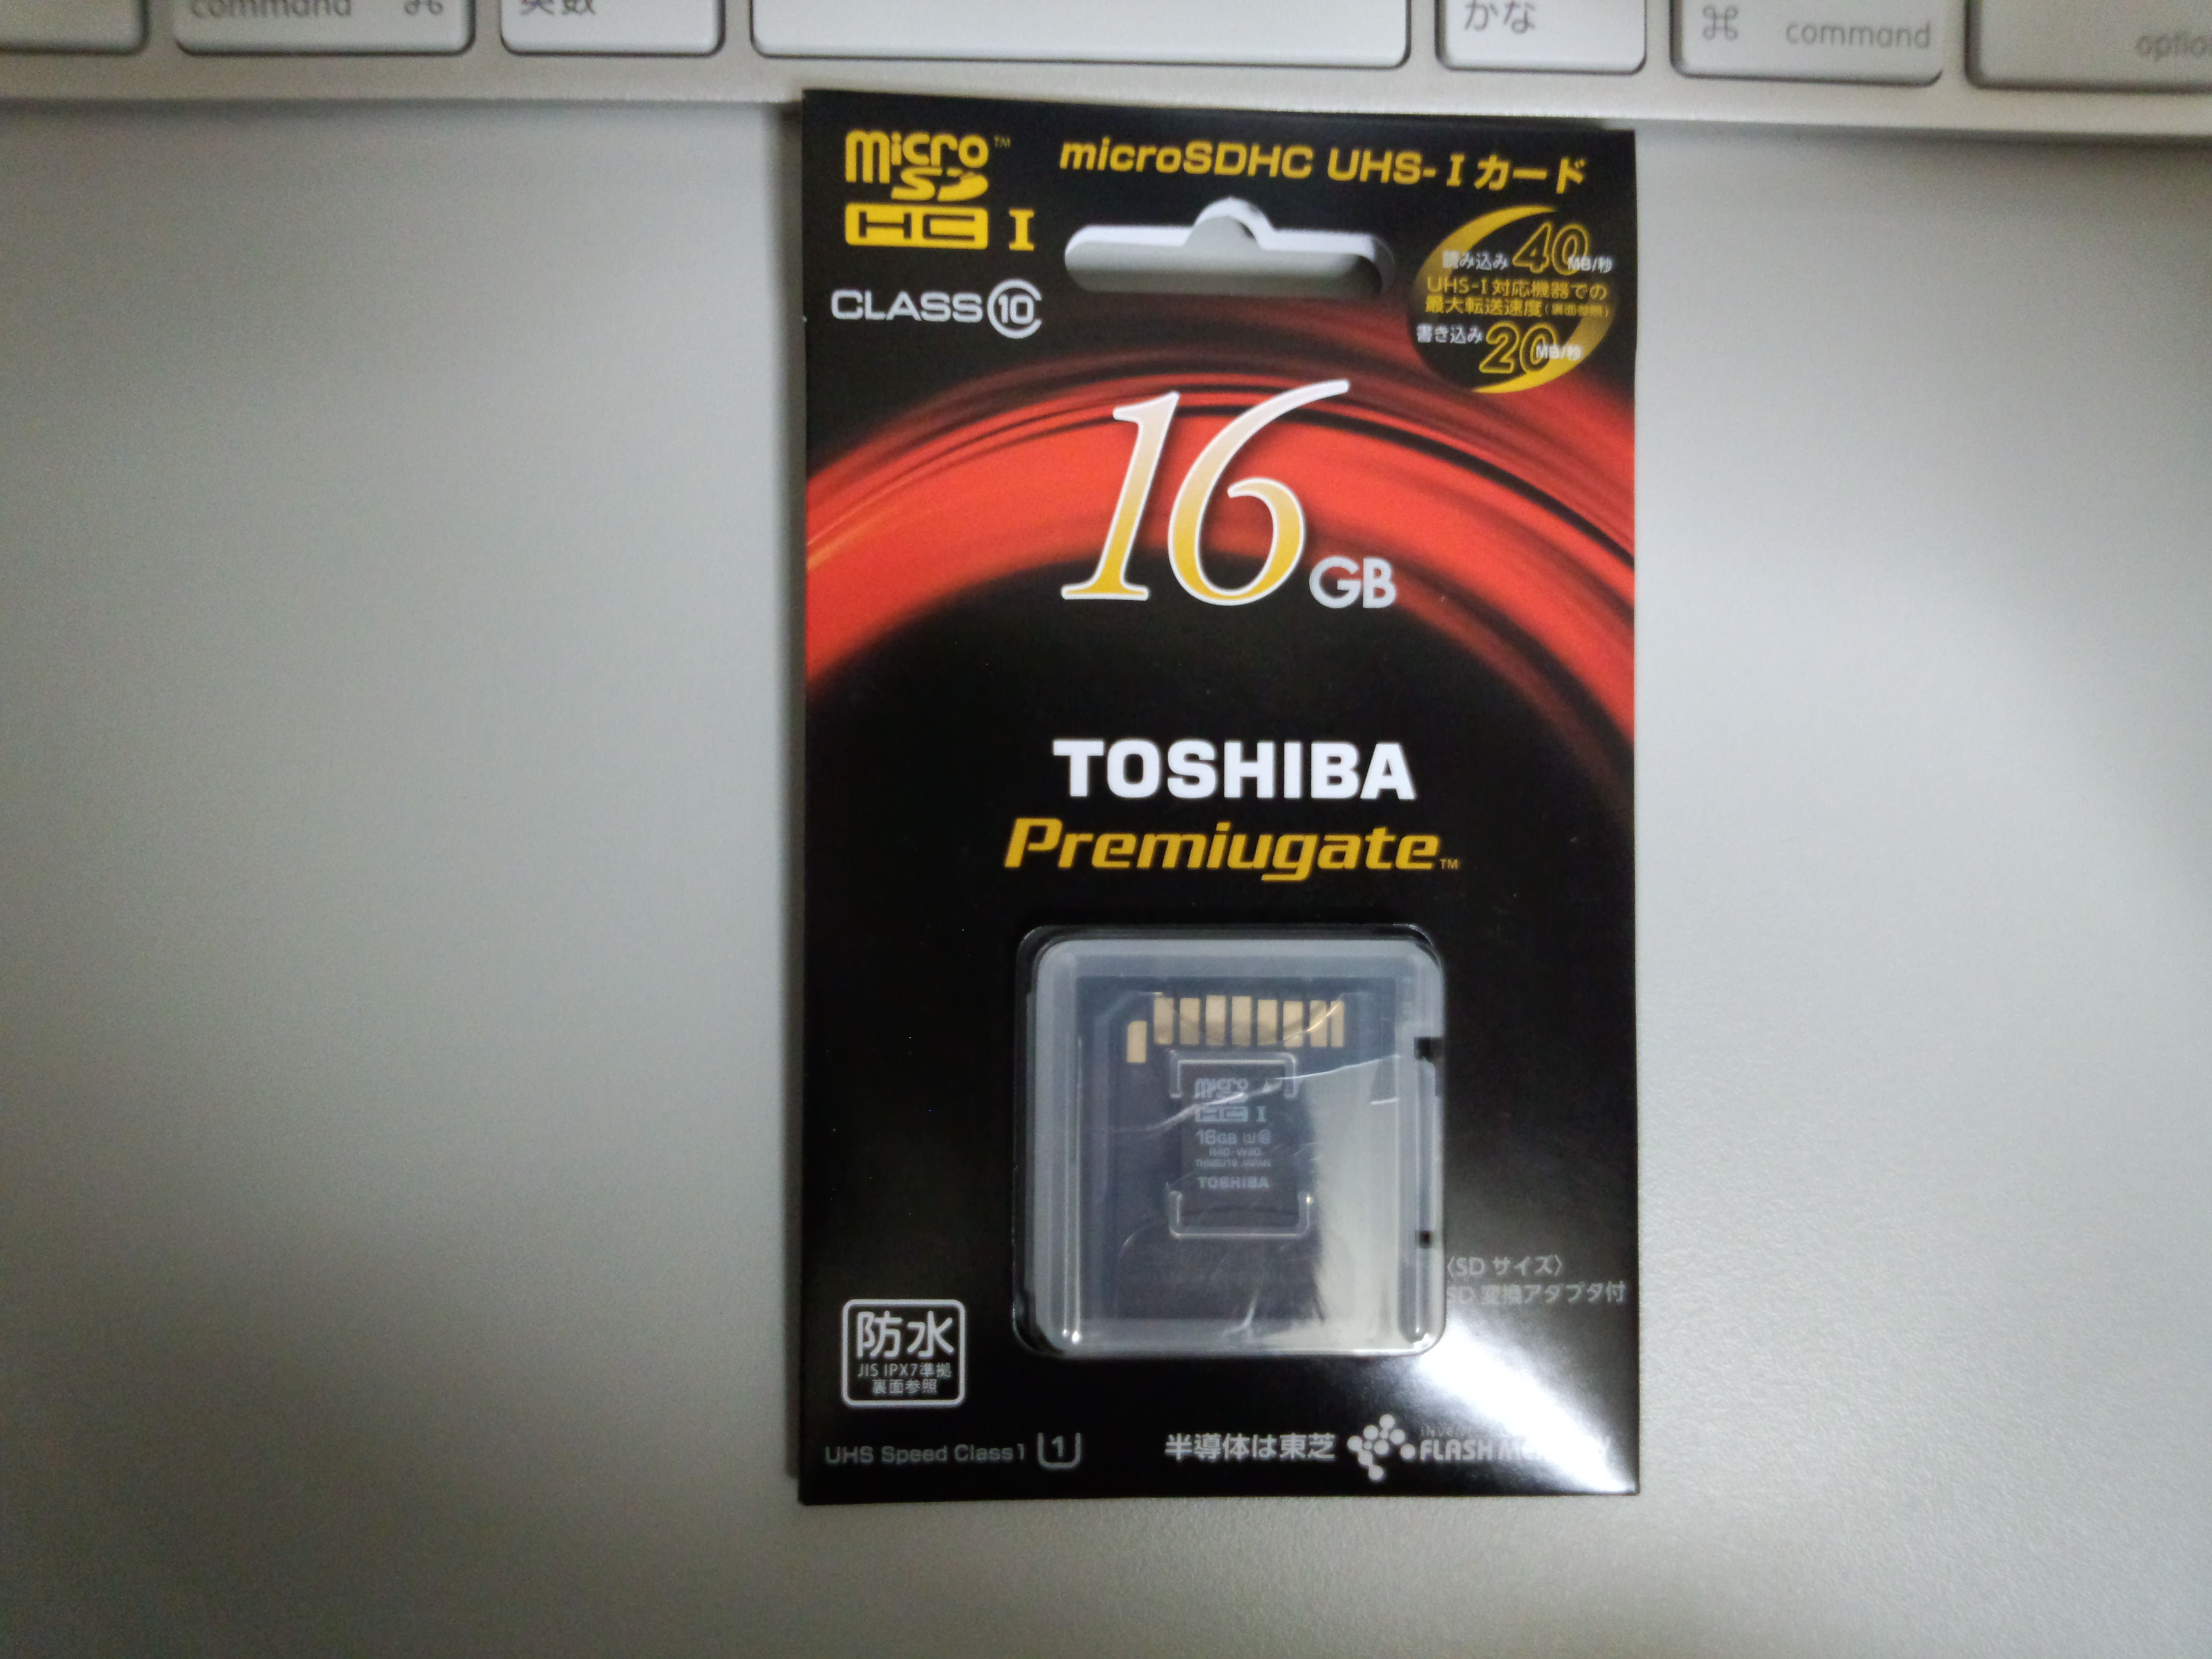 TOSHIBA Premiugate UHS-I MicroSDHC 16GB Class10 – Wing World